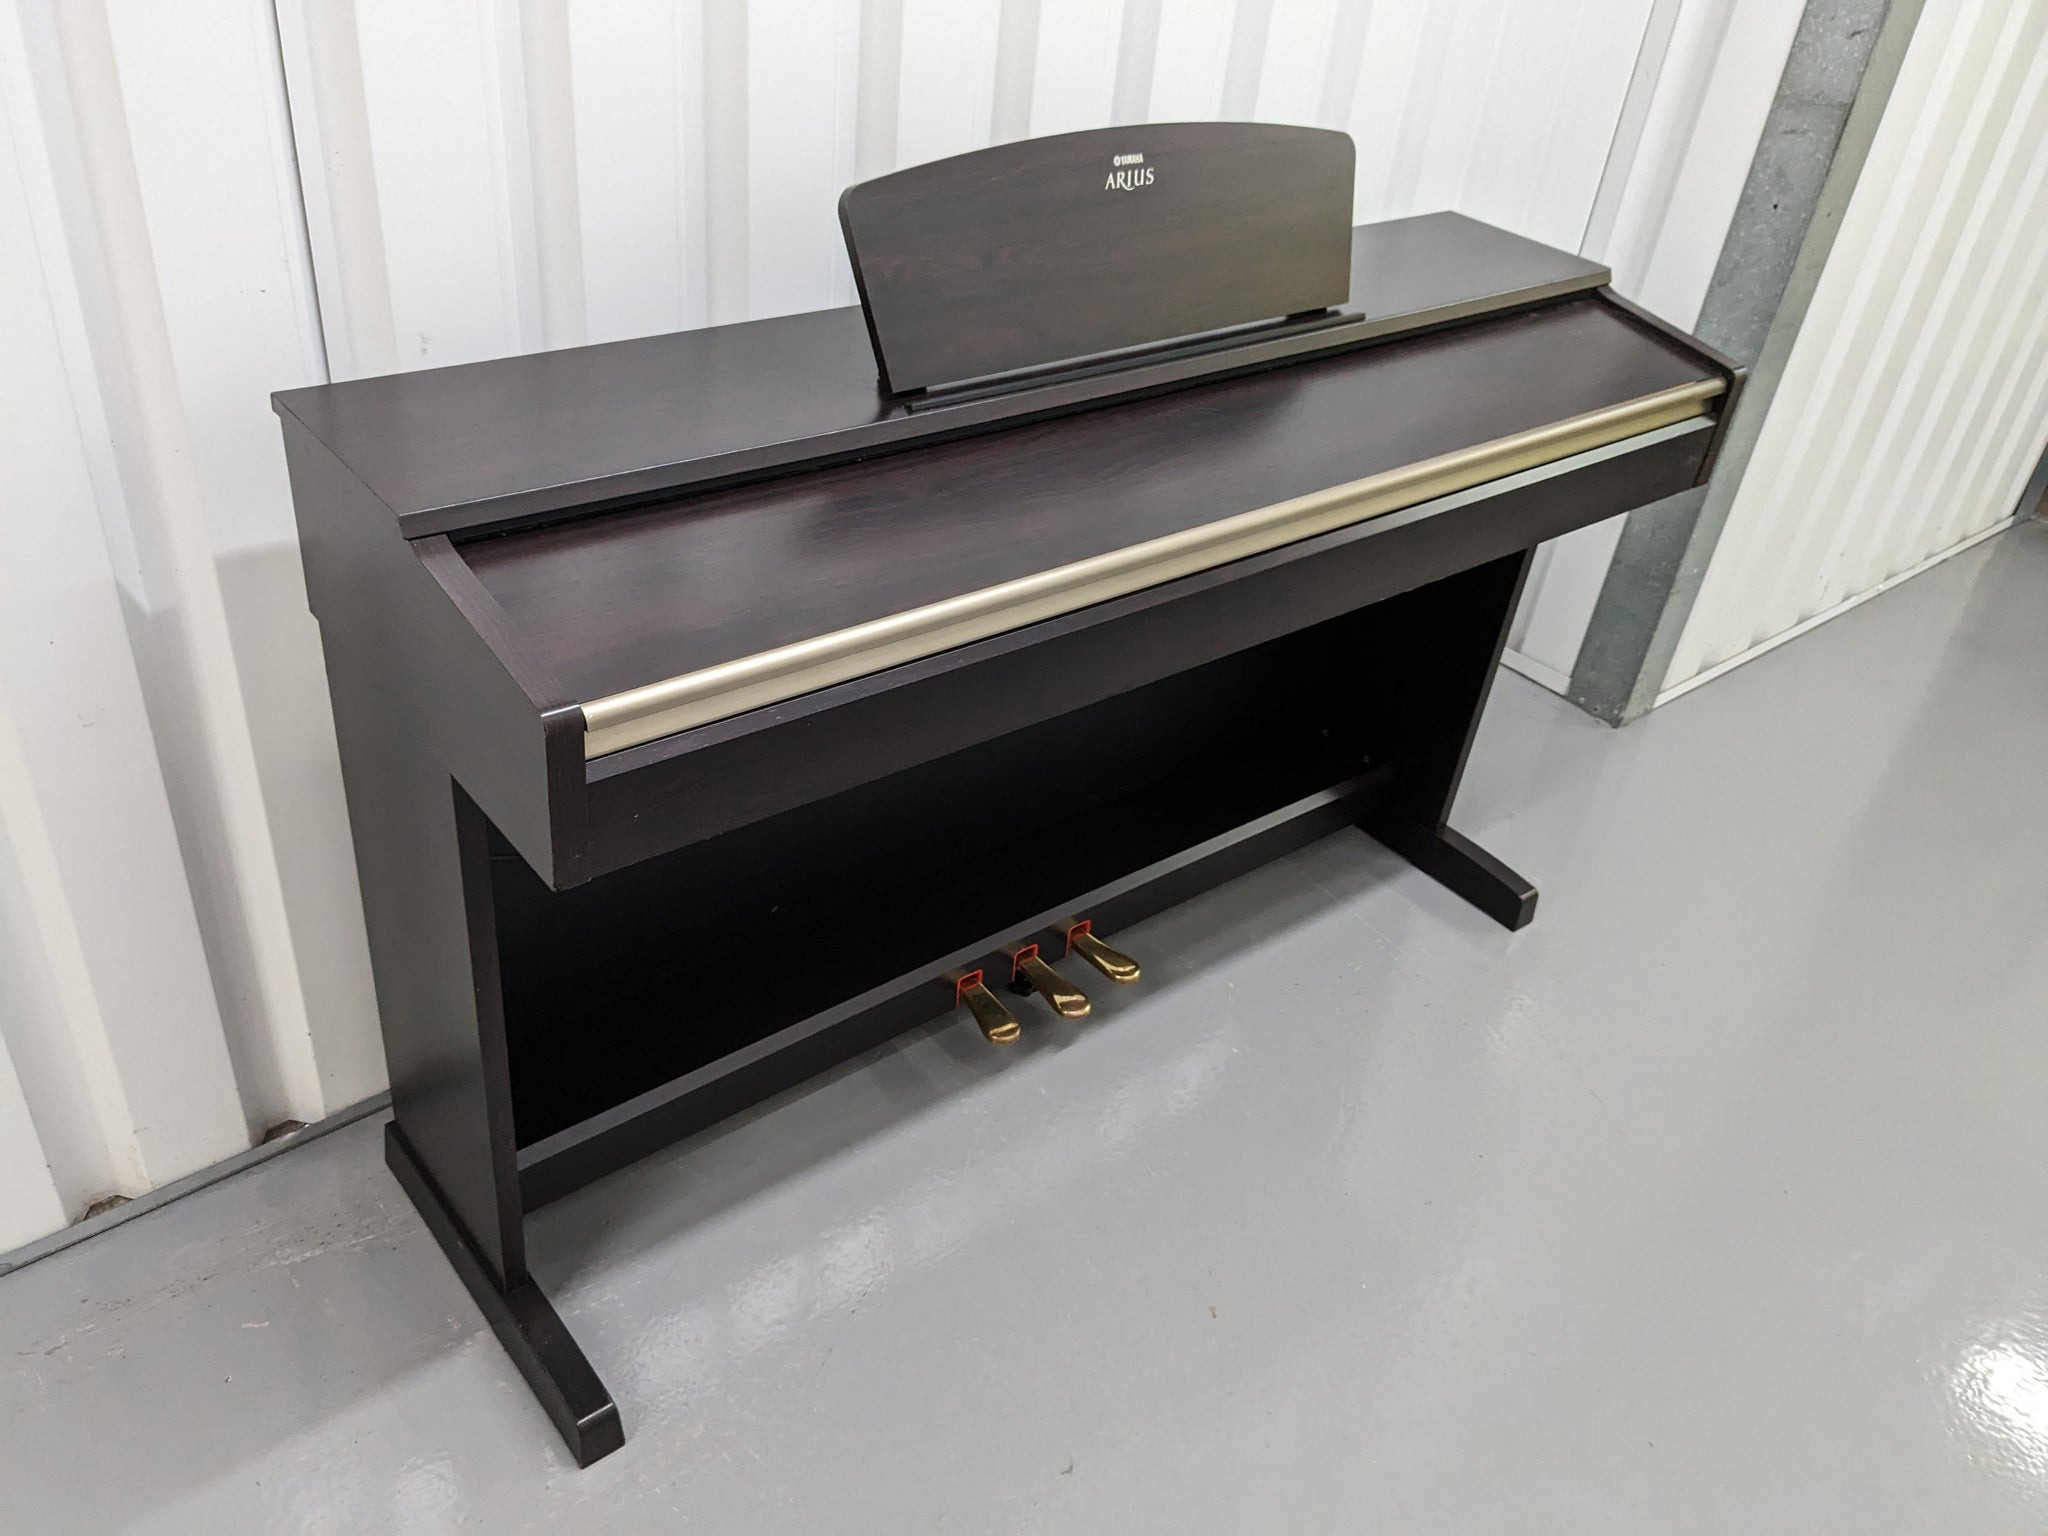 Yamaha Arius YDP-151 Digital Piano in dark rosewood with GH clavinova  keyboard stock # 23115